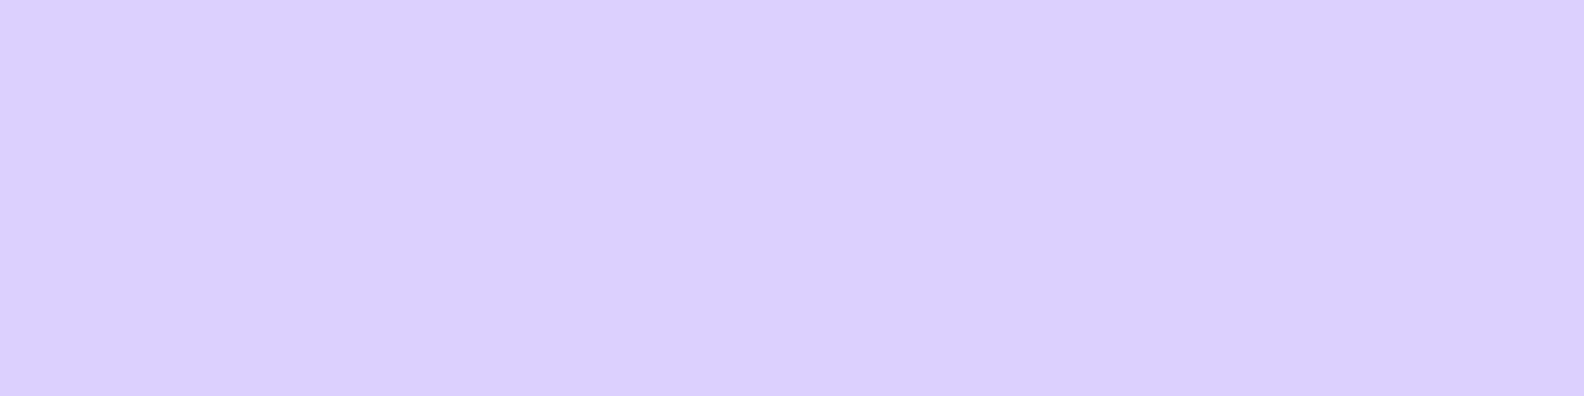 1584x396 Pale Lavender Solid Color Background